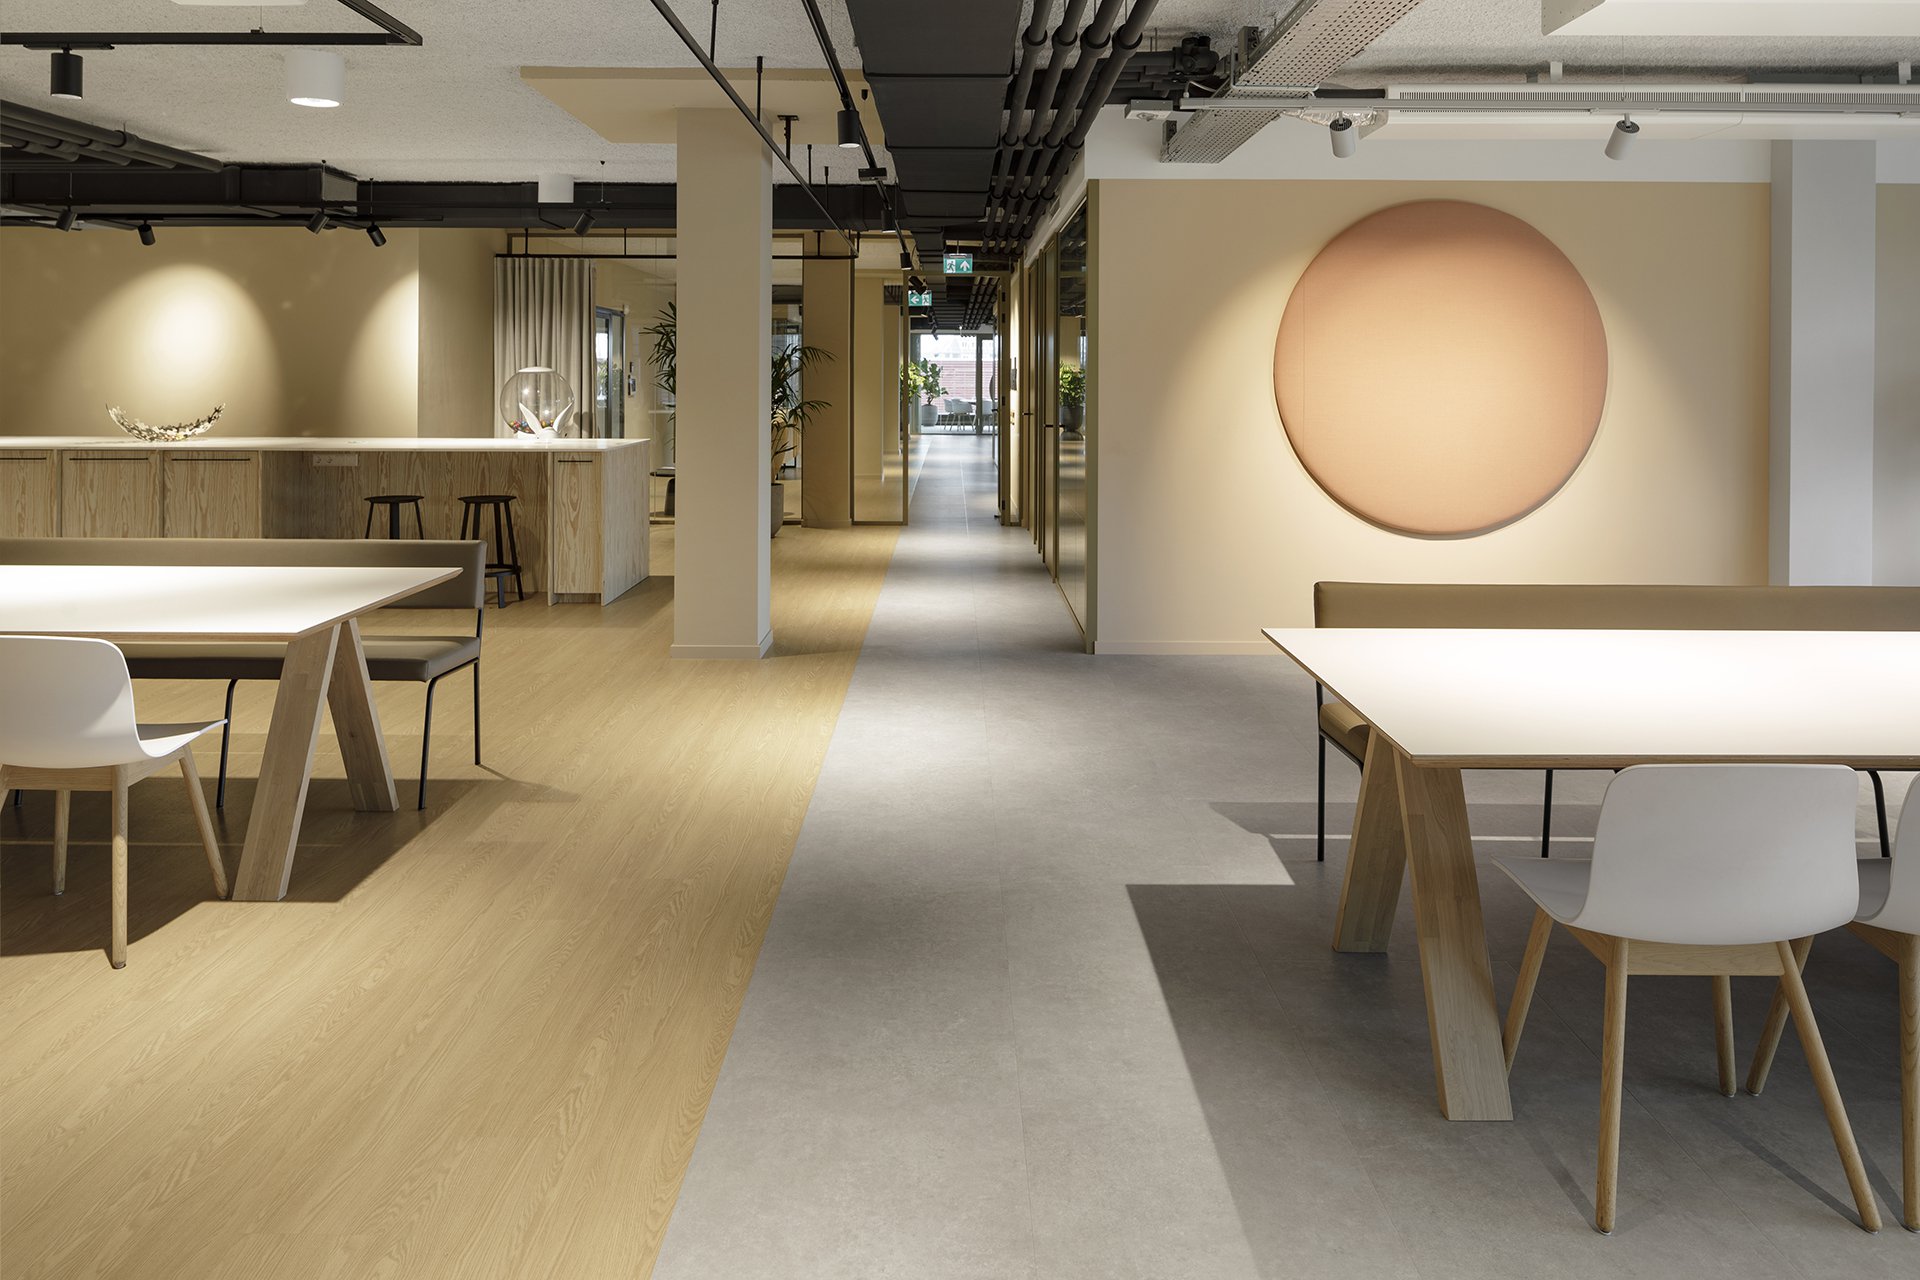 Architecture design, Fokkema & Partners, Zuidbroek Notarissen, warm, transparant kantoorinterieur met ronde details en lijnenspel